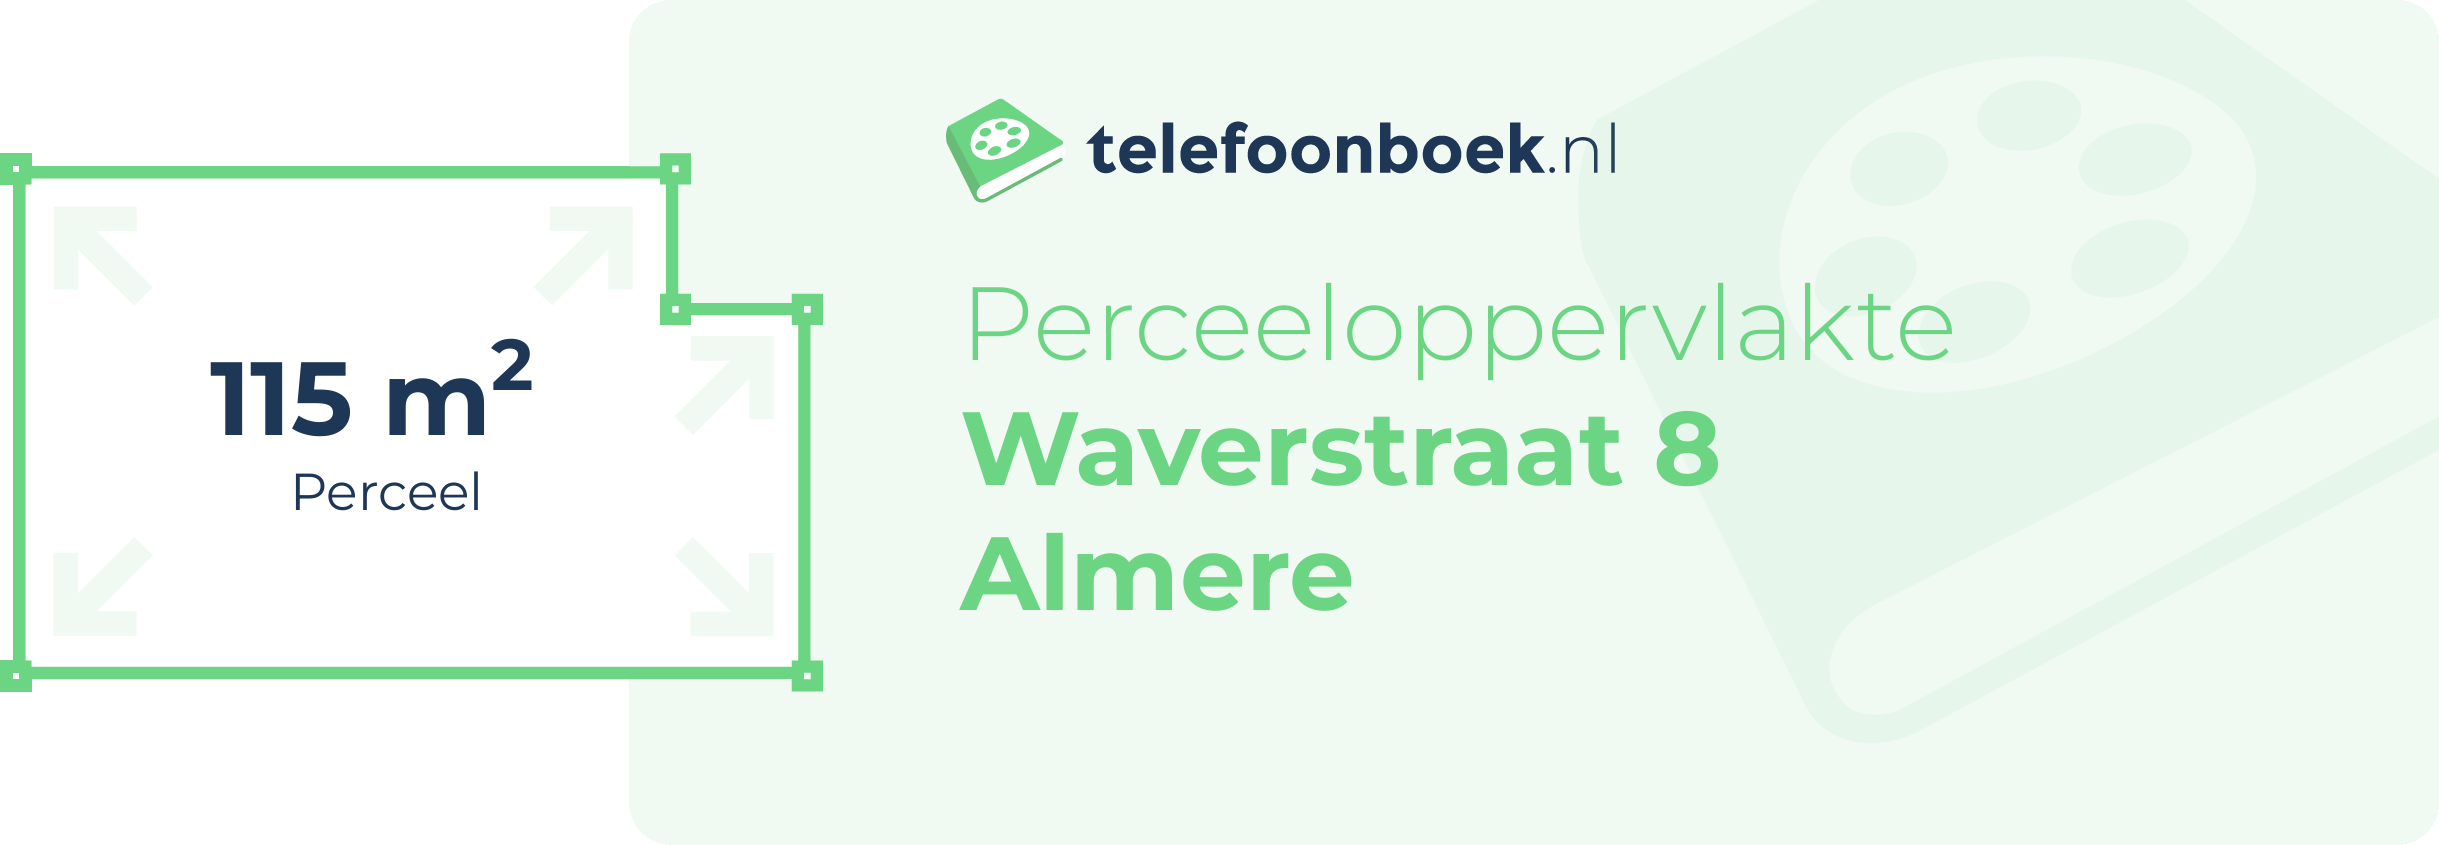 Perceeloppervlakte Waverstraat 8 Almere